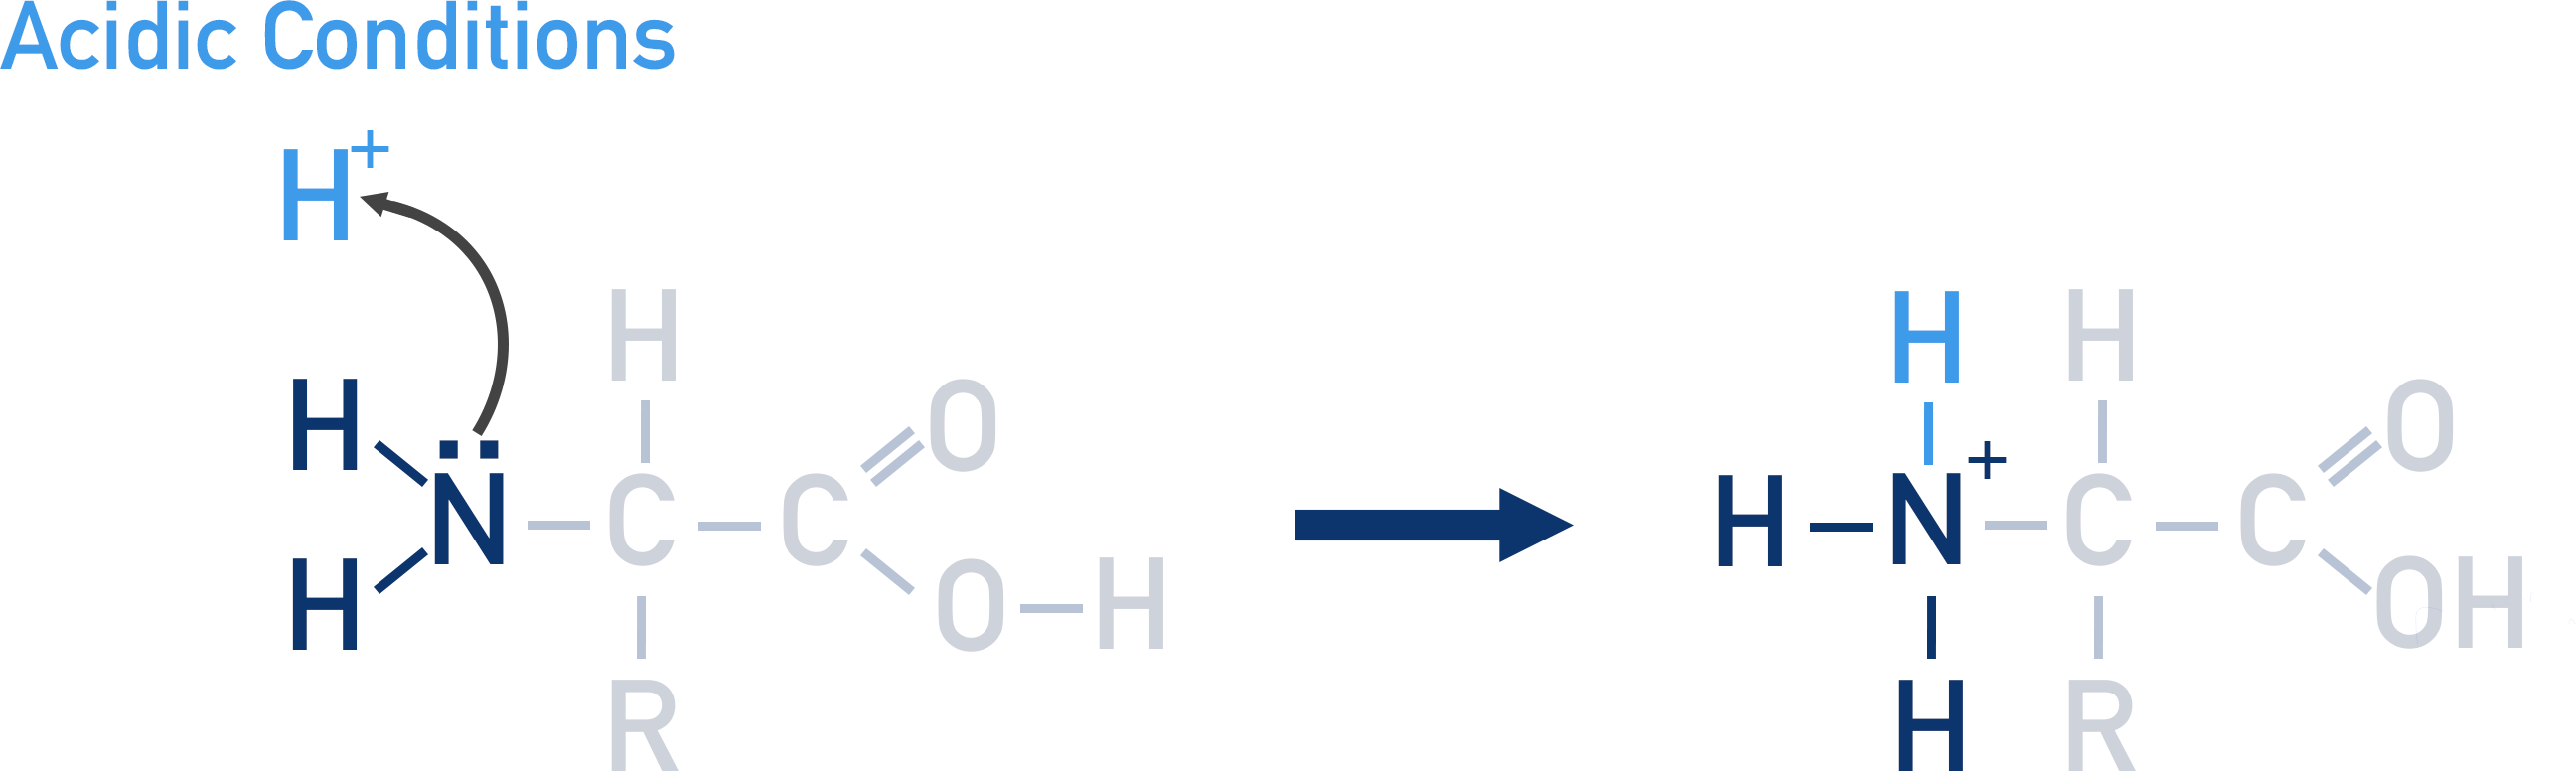 amino acids with acid